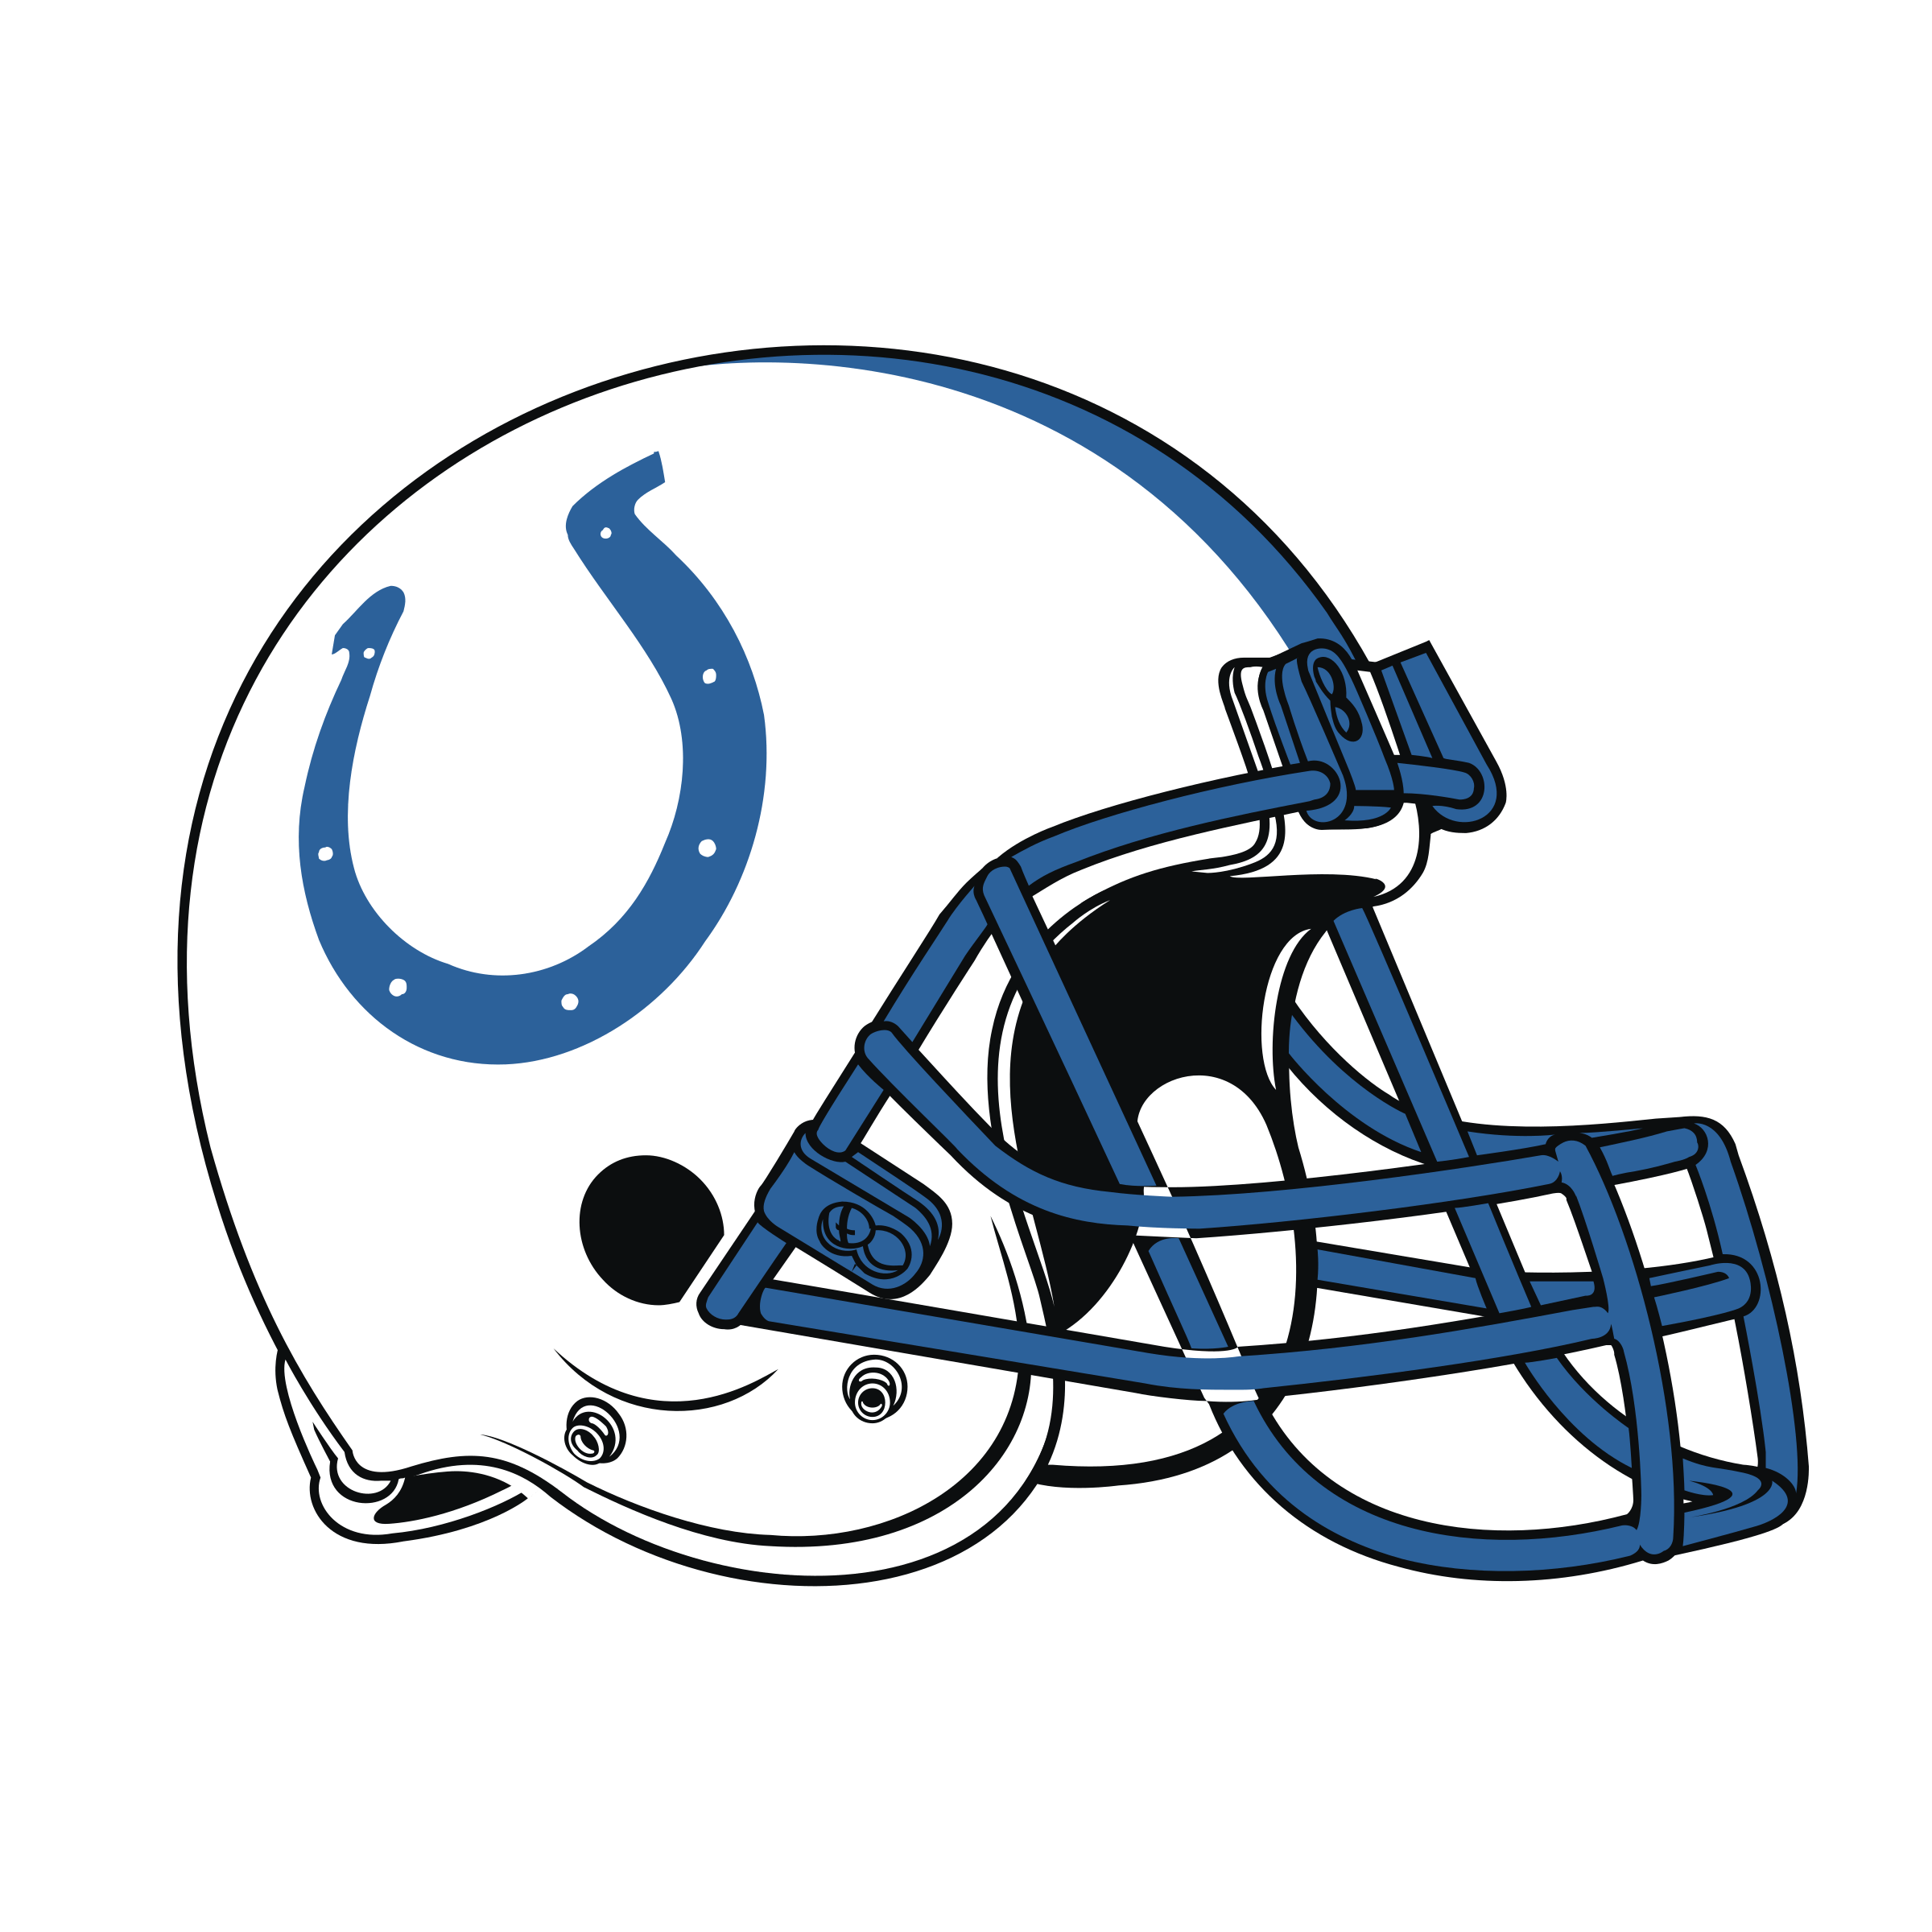 Indianapolis Colts Logo - Indianapolis Colts Logo SVG Vector & PNG Transparent - Vector Logo ...